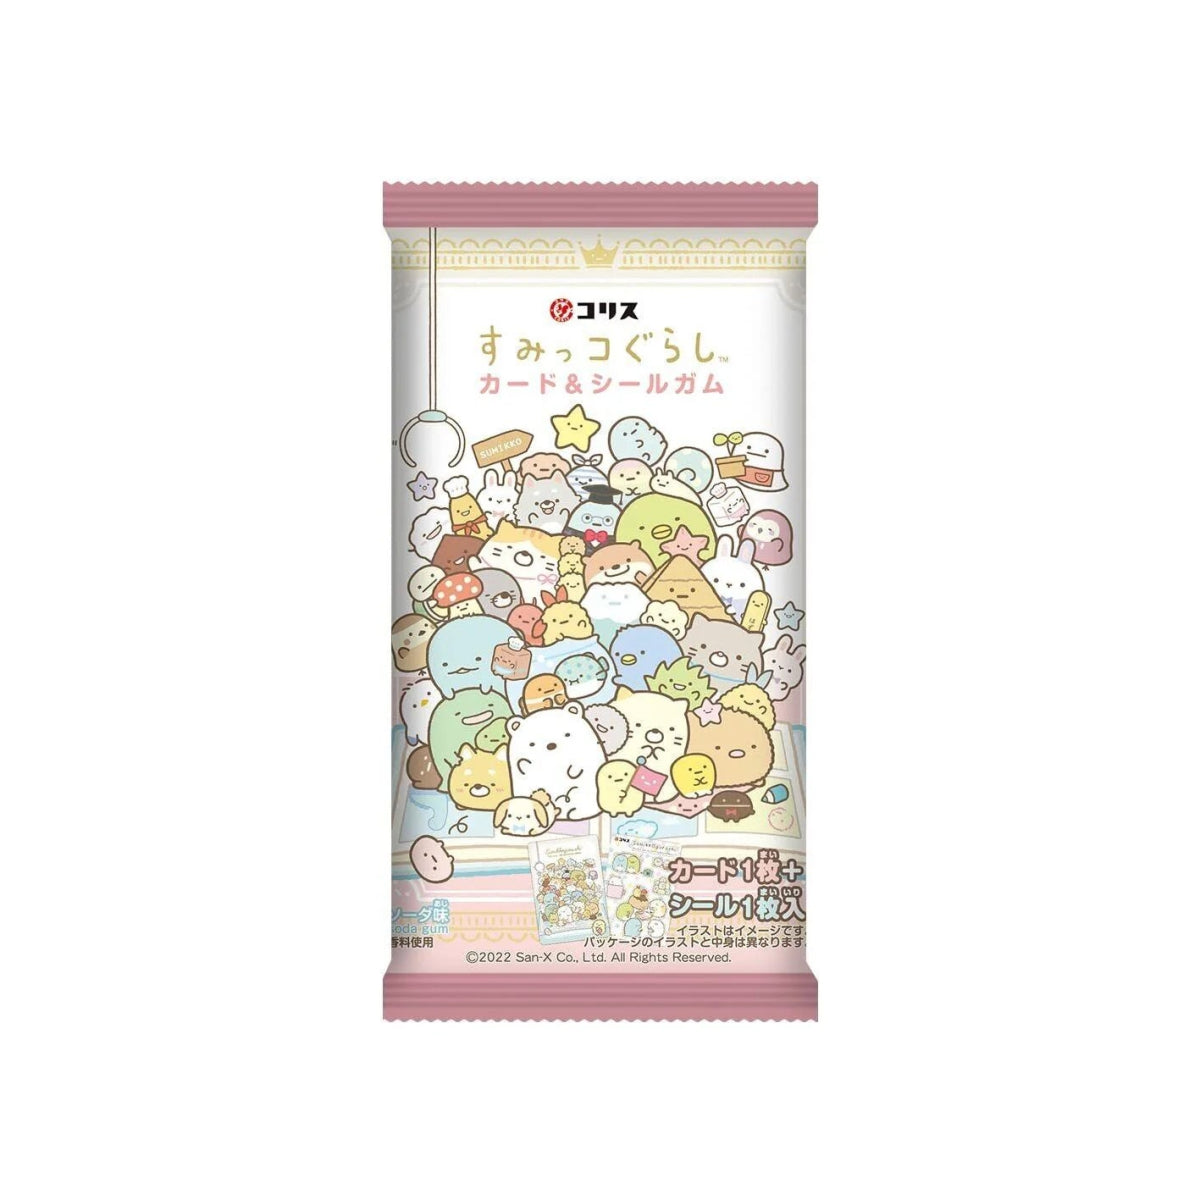 Coris Sumikkogurashi (Squishmallow) Card and Seal Gum 3.5g - Candy Mail UK